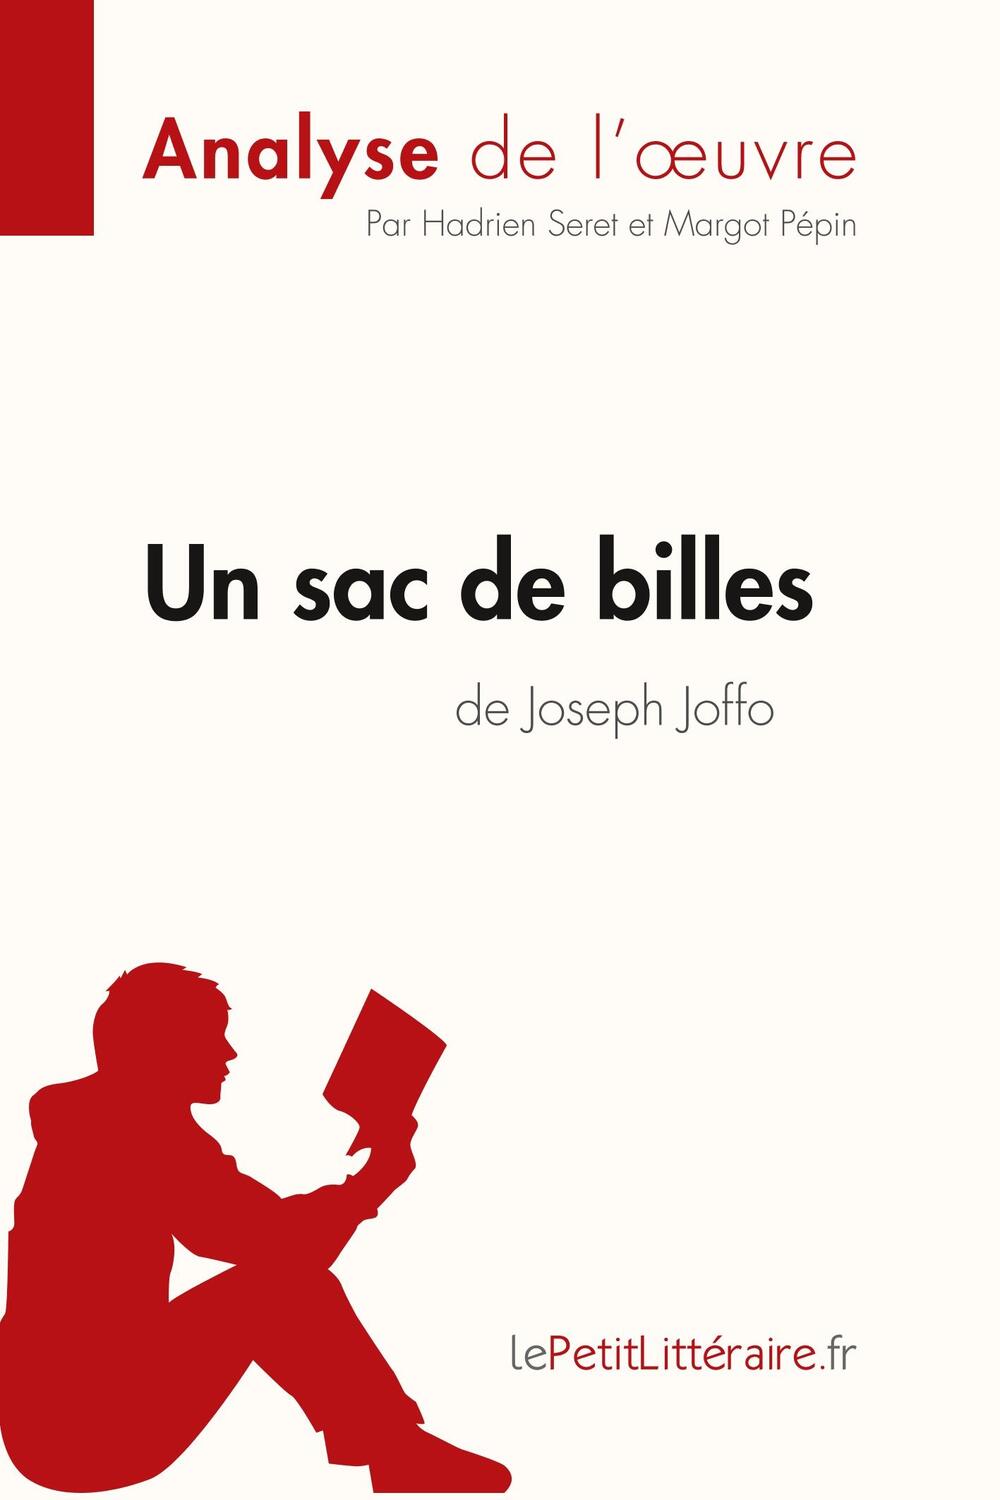 Cover: 9782808003155 | Un sac de billes de Joseph Joffo (Analyse de l'oeuvre) | Seret (u. a.)